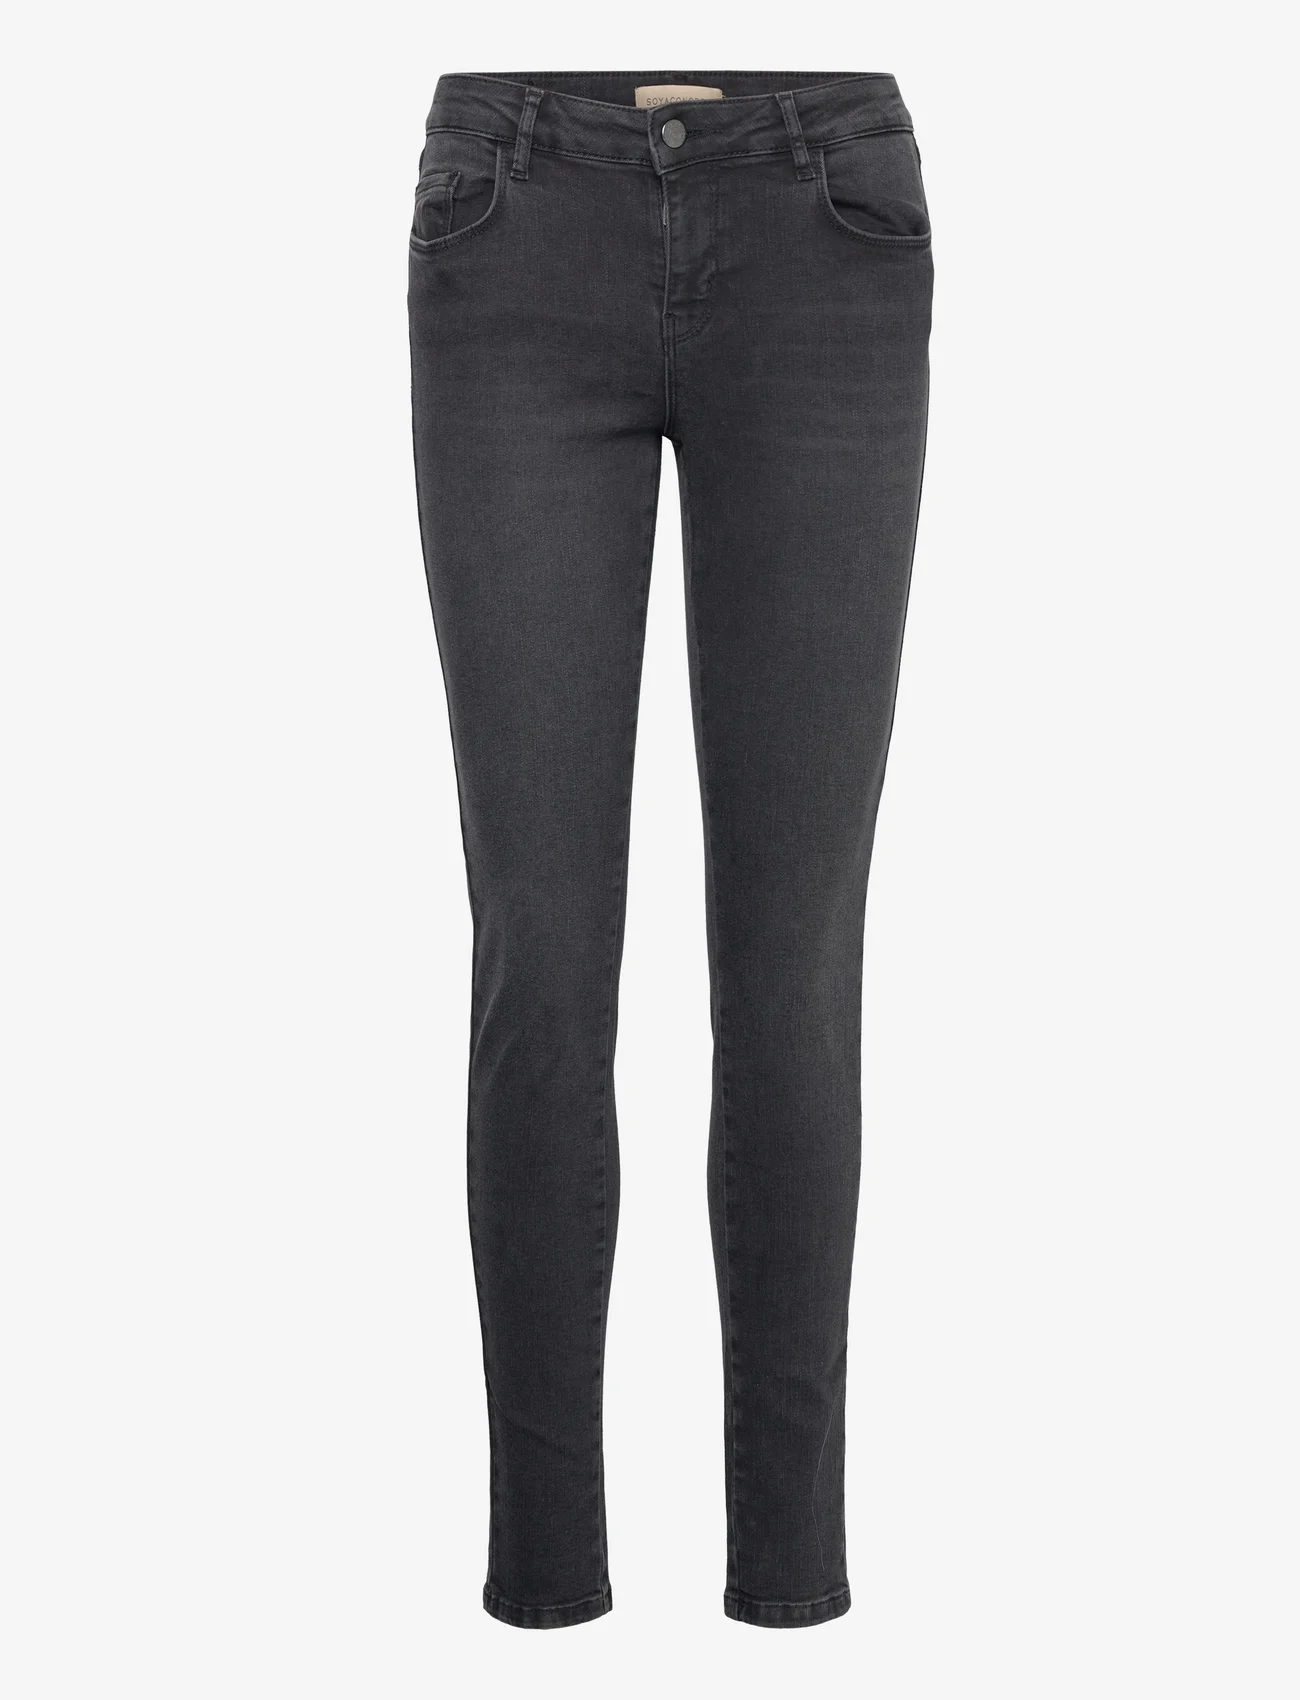 Soyaconcept - SC-KIMBERLY LANA - slim fit jeans - dark grey denim - 0